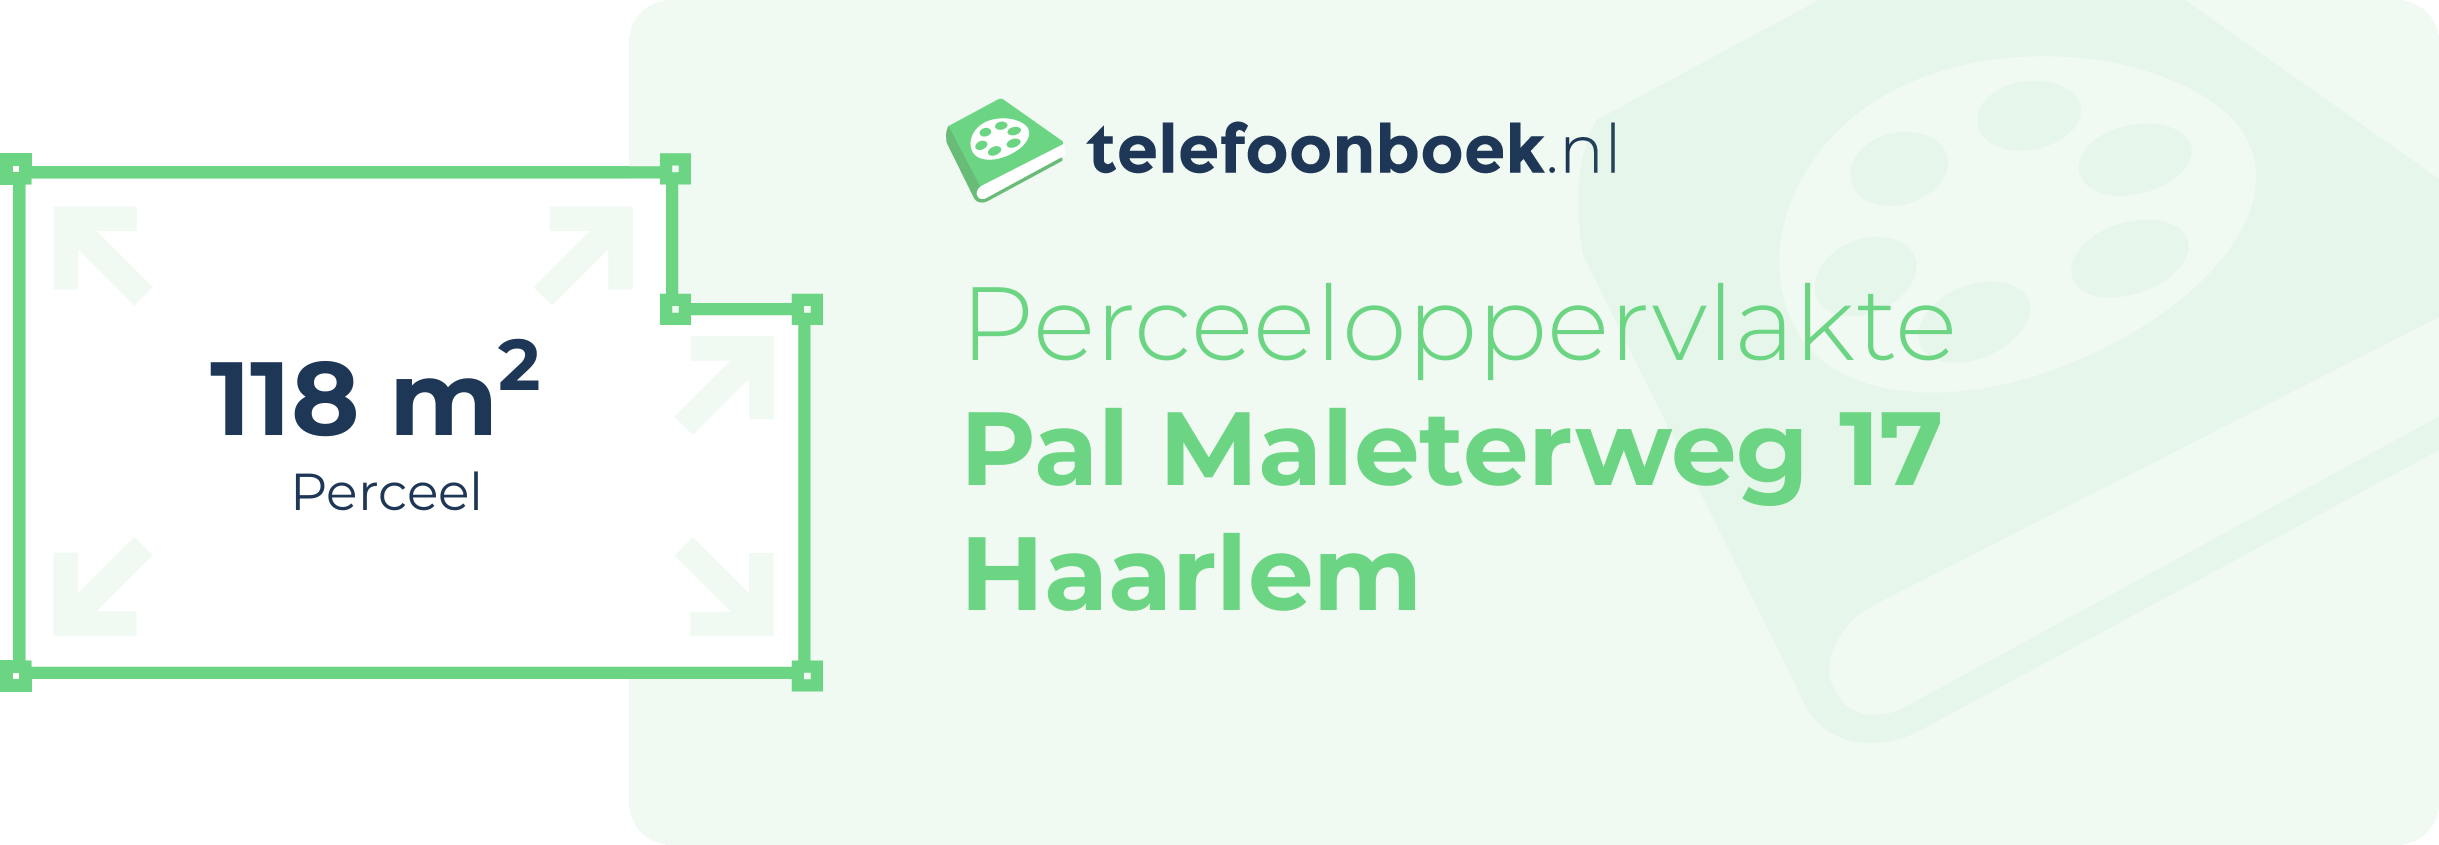 Perceeloppervlakte Pal Maleterweg 17 Haarlem